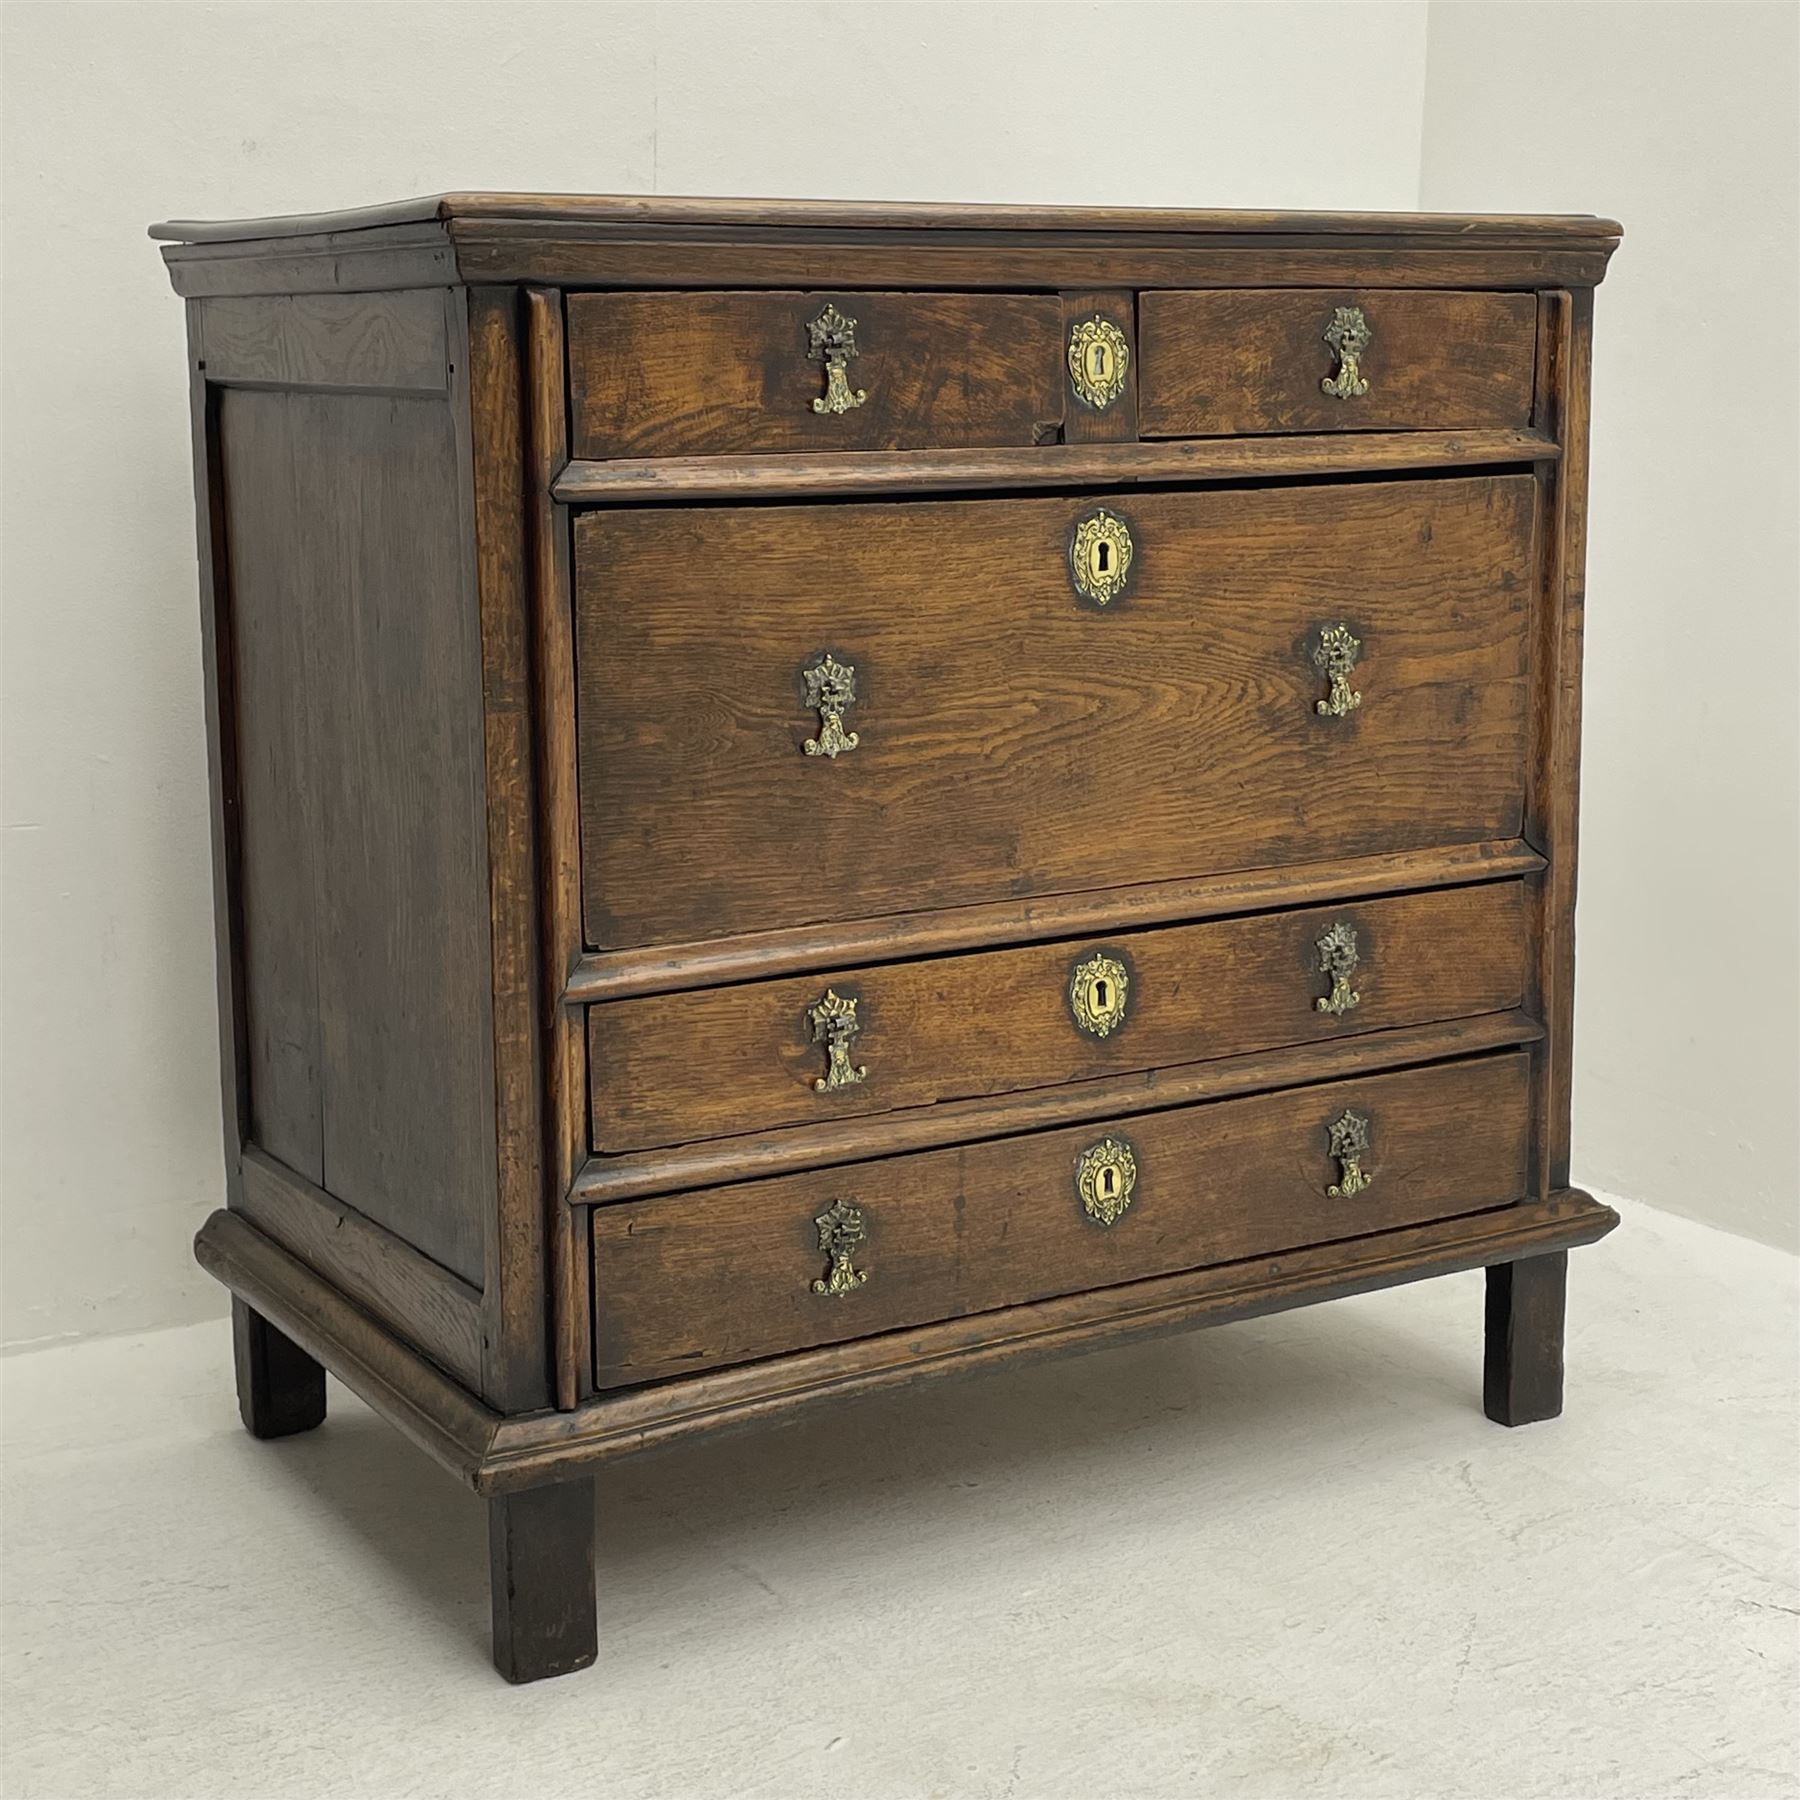 18th century oak chest - Image 2 of 5